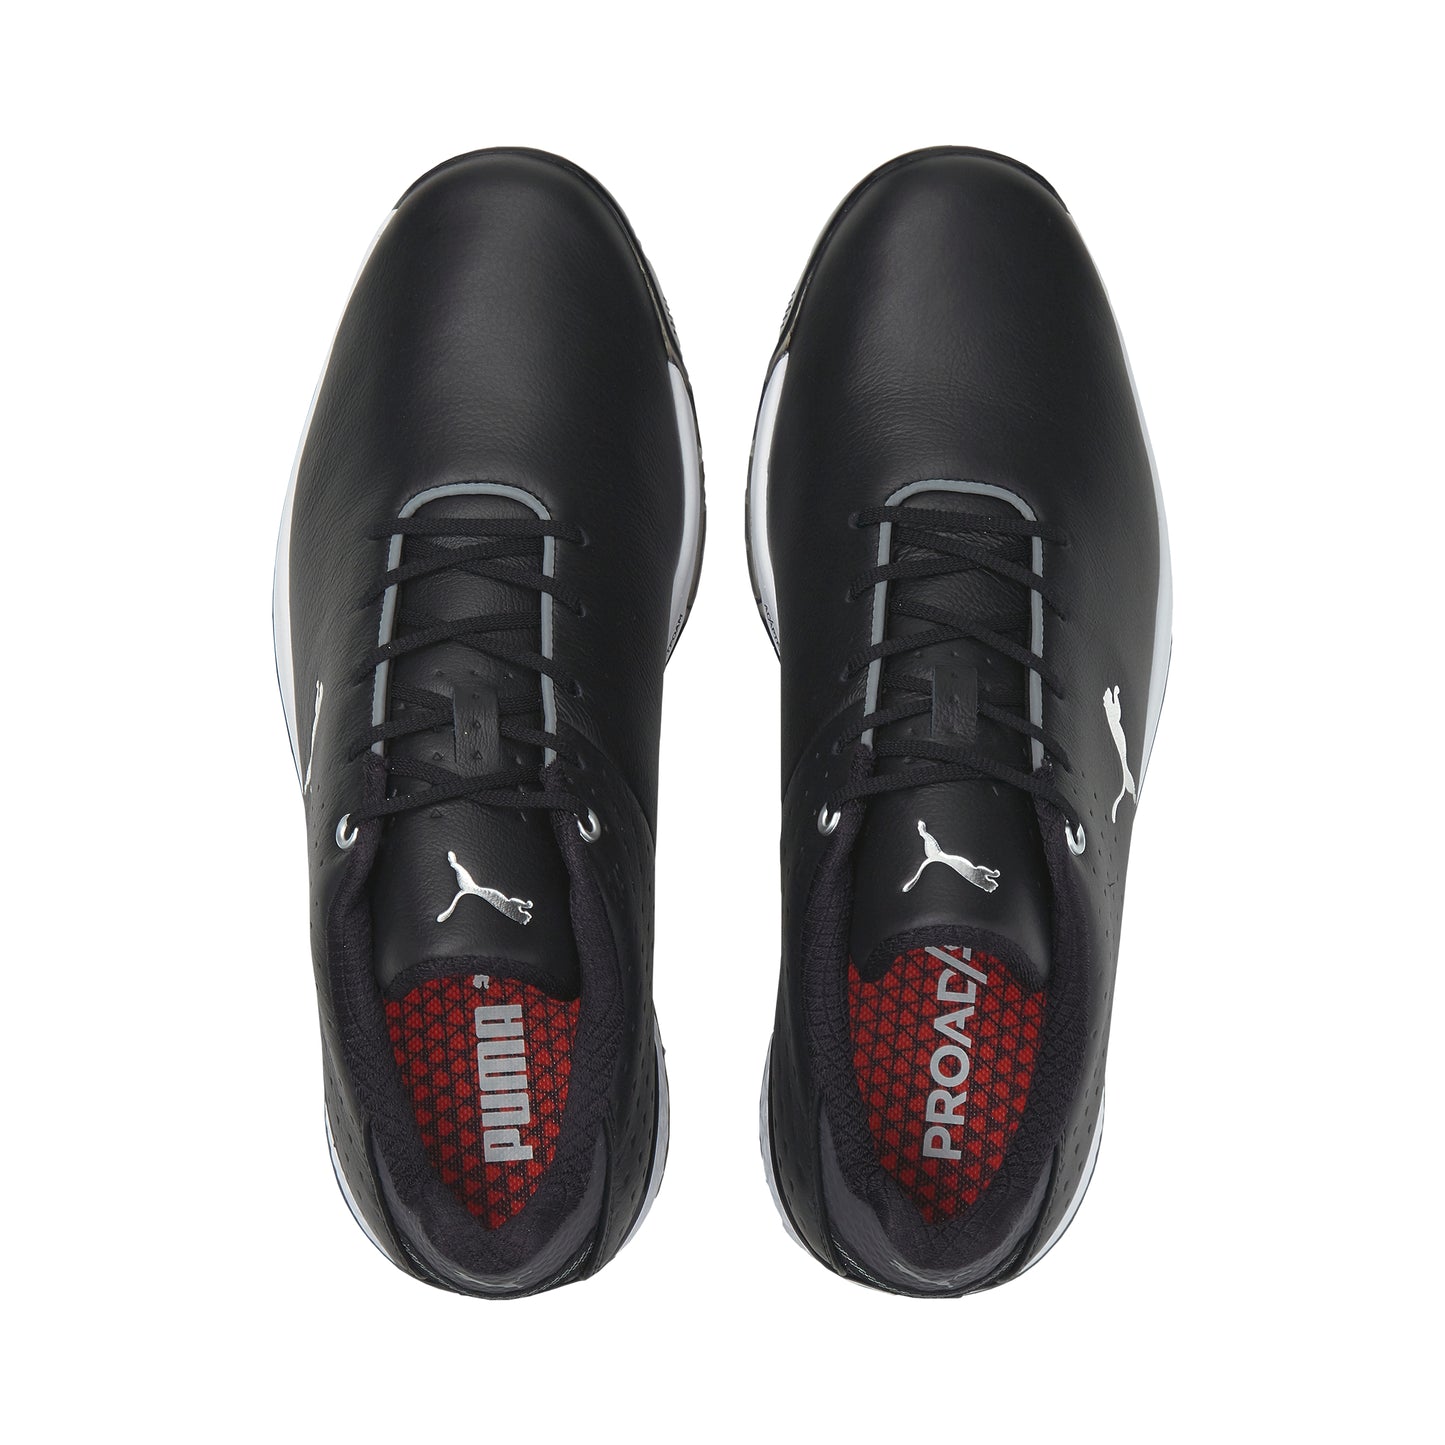 Puma Men's Proadapt Alphacat Leather Golf Shoes - Black/Silver